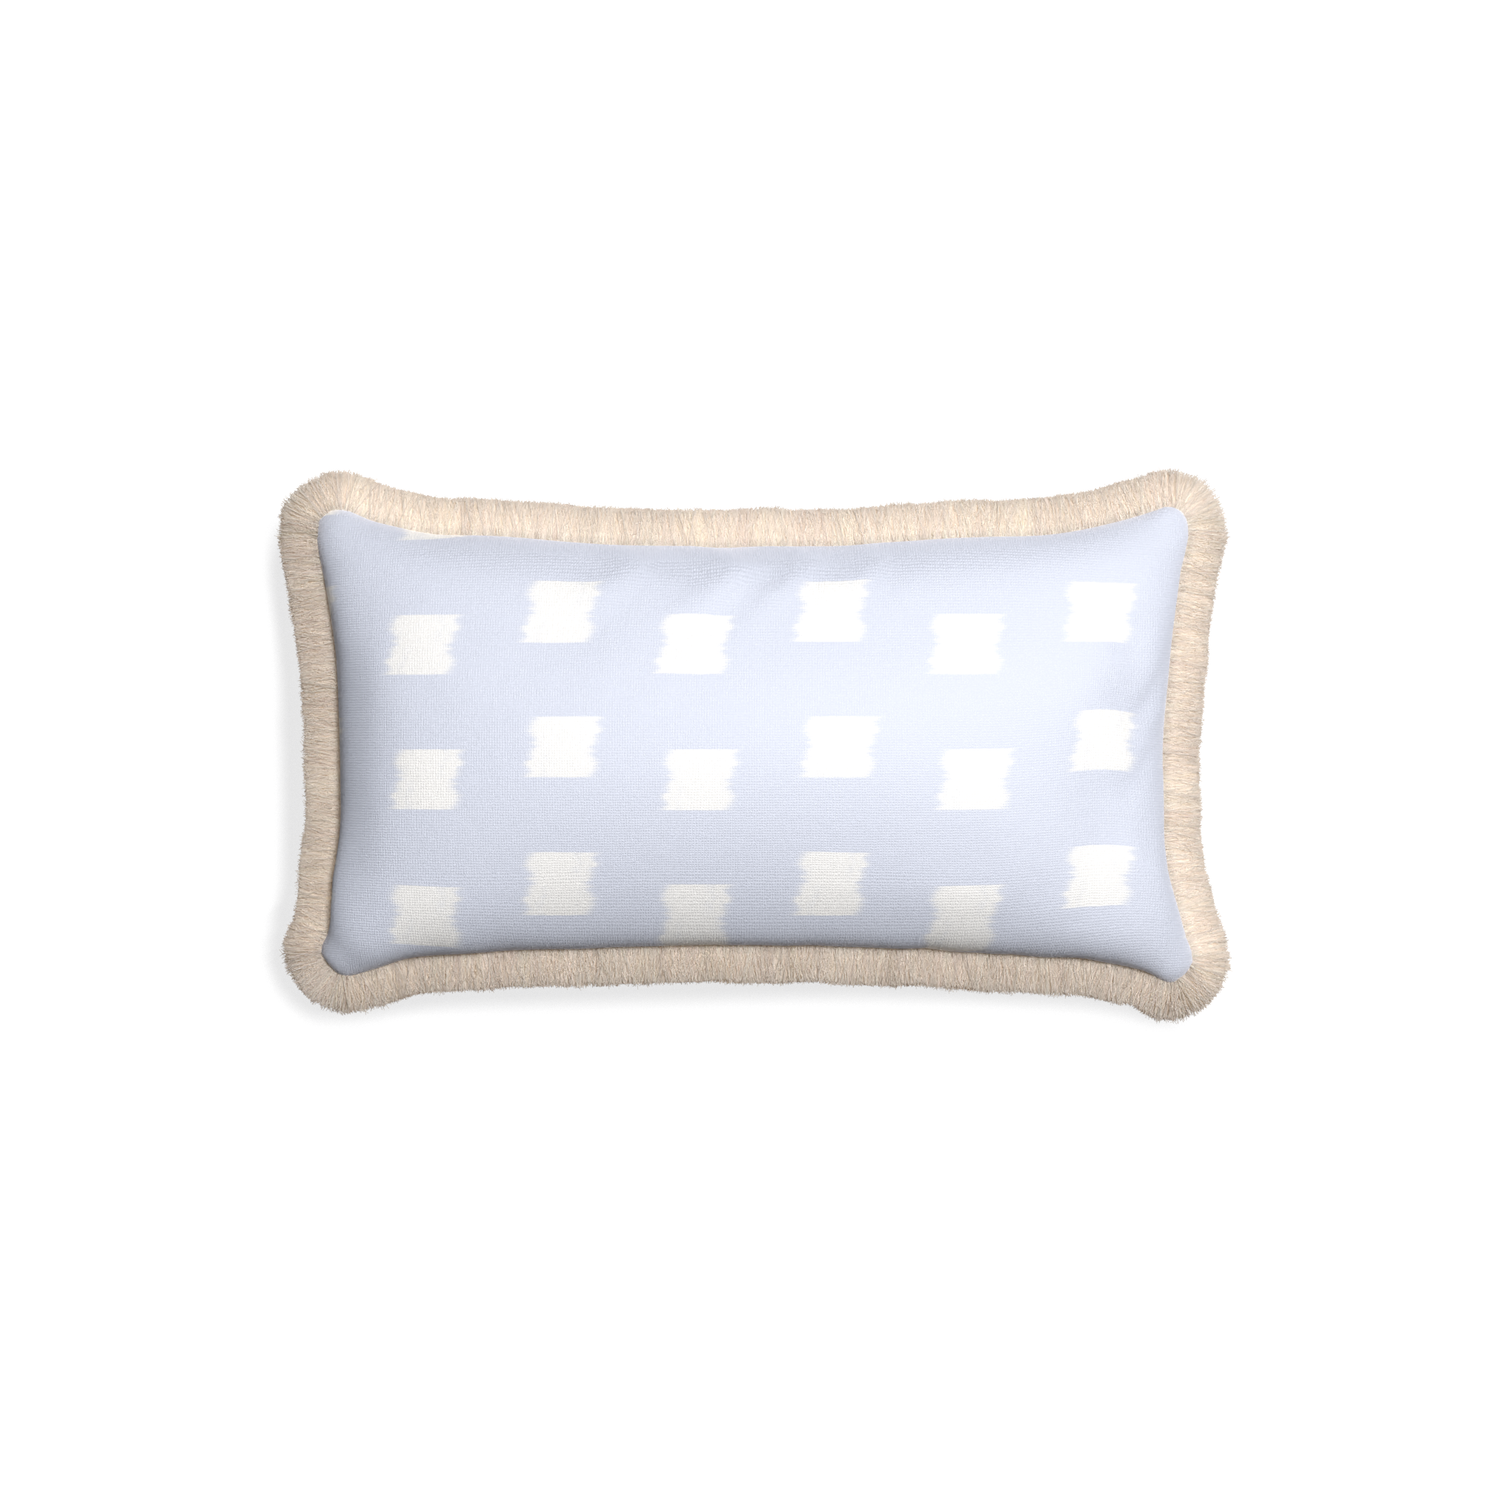 Petite-lumbar denton custom sky blue patternpillow with cream fringe on white background